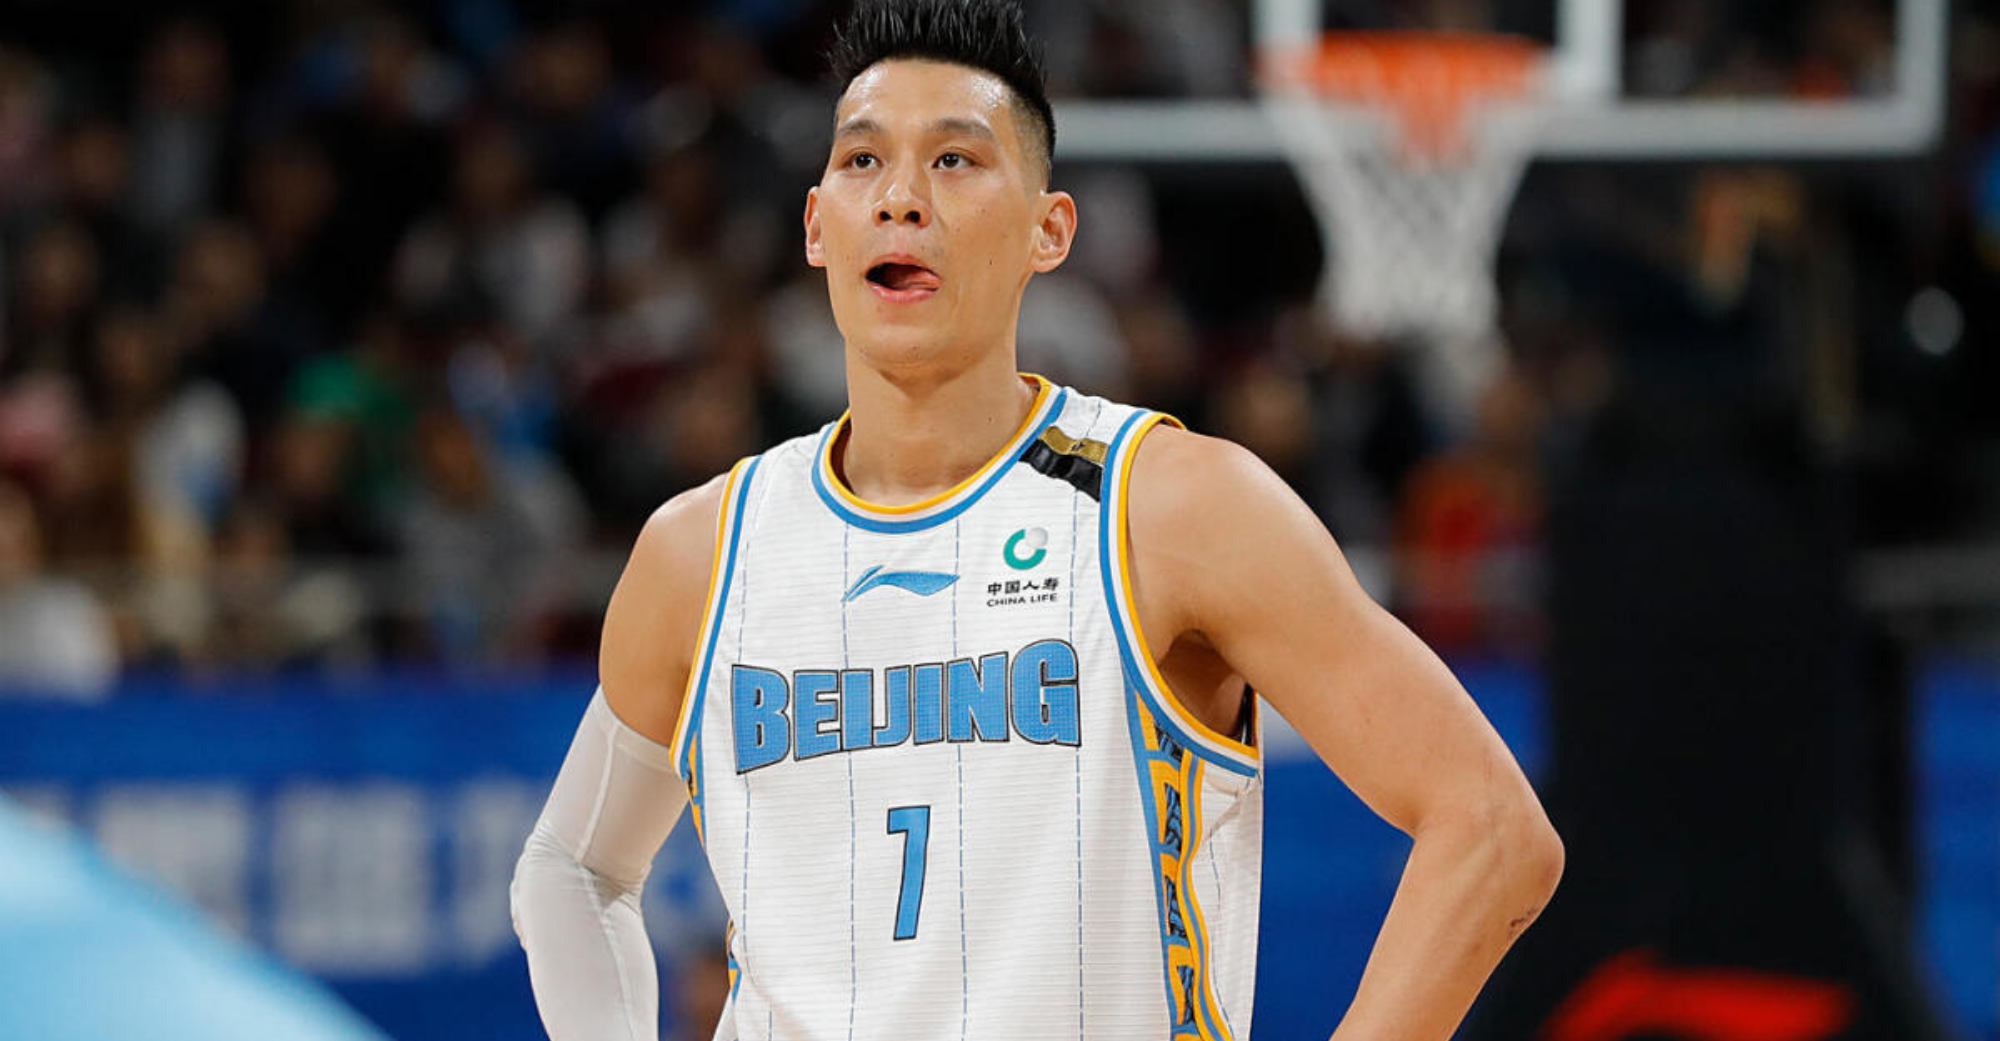 Jeremy Lin on His Bid to Return to NBA: “I felt like I needed to put my heart on the line”